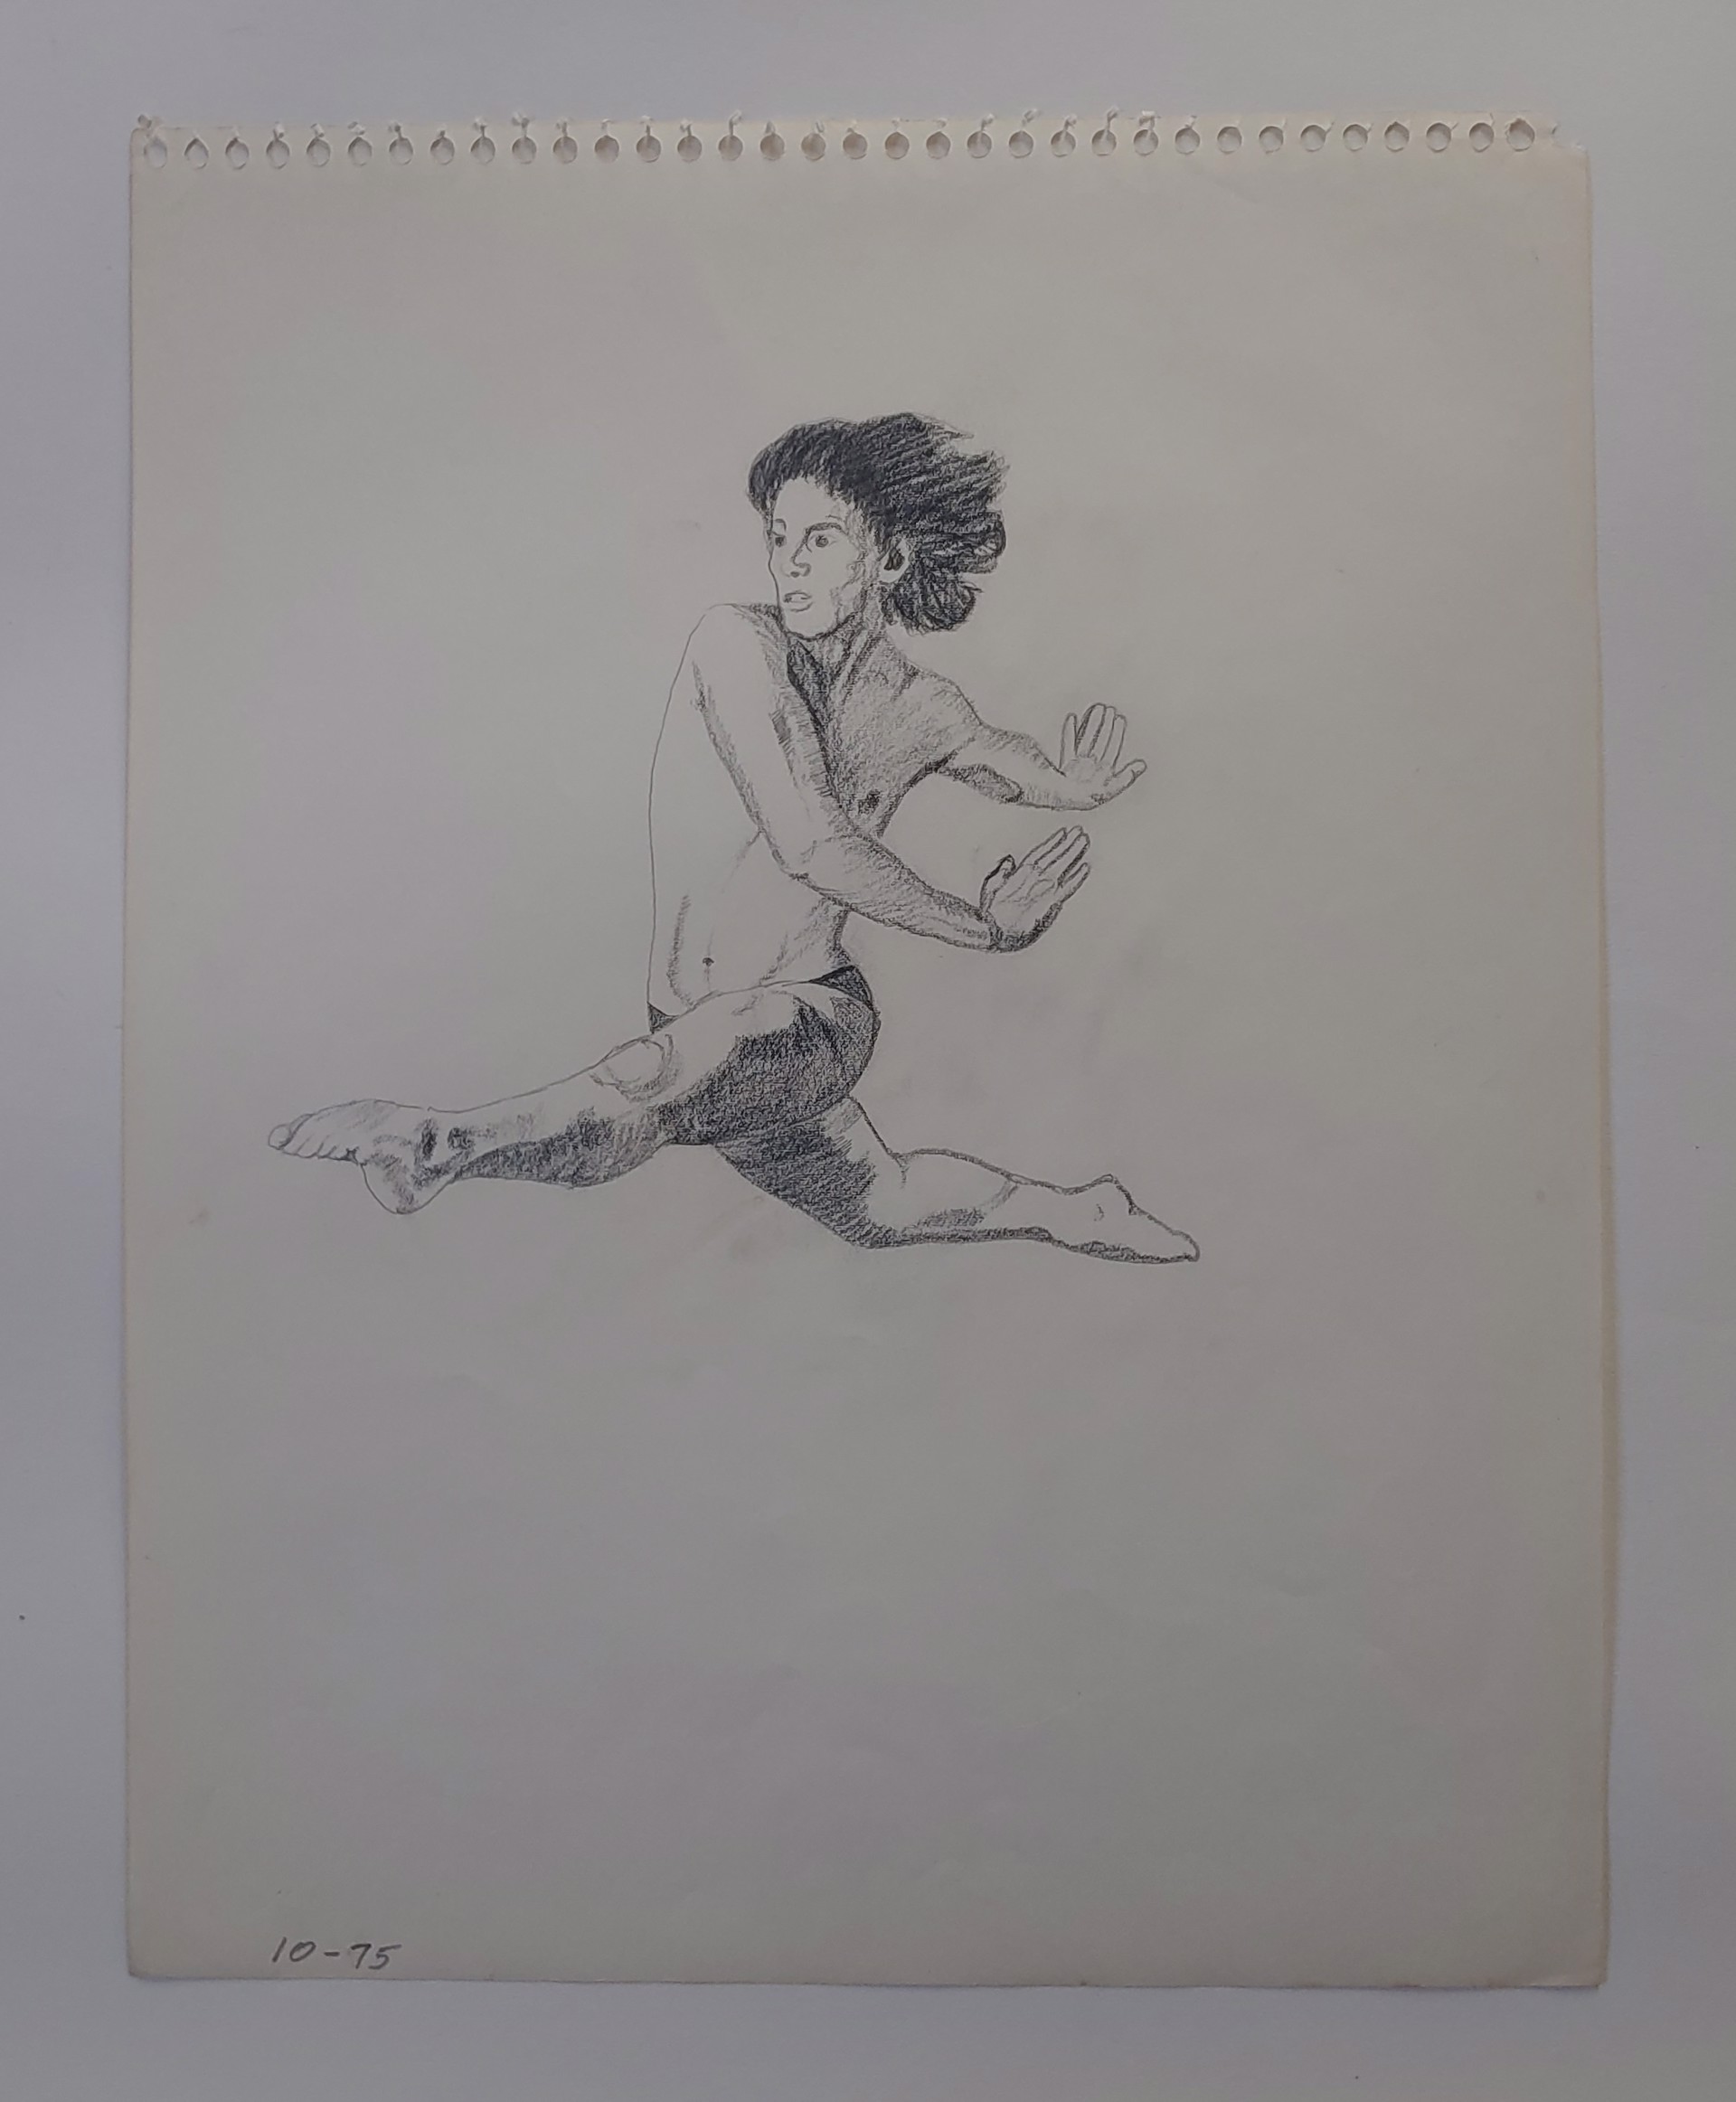 Man in Motion #2 - Drawing by David Amdur